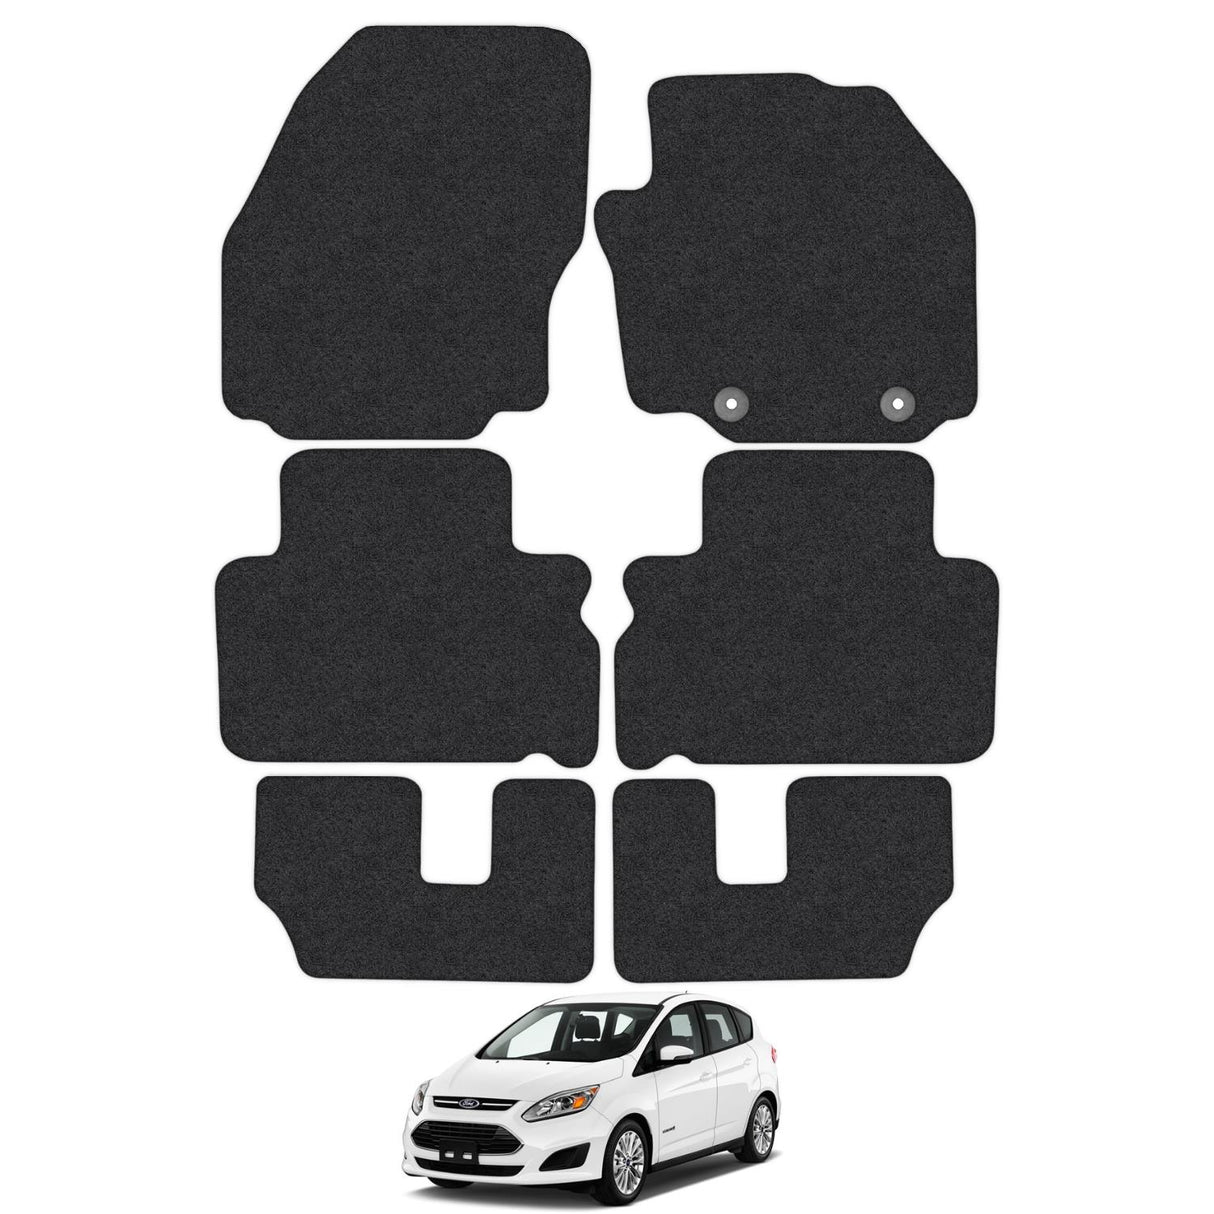 Ford S-Max 7 Seats Car Mats (2011-2015)